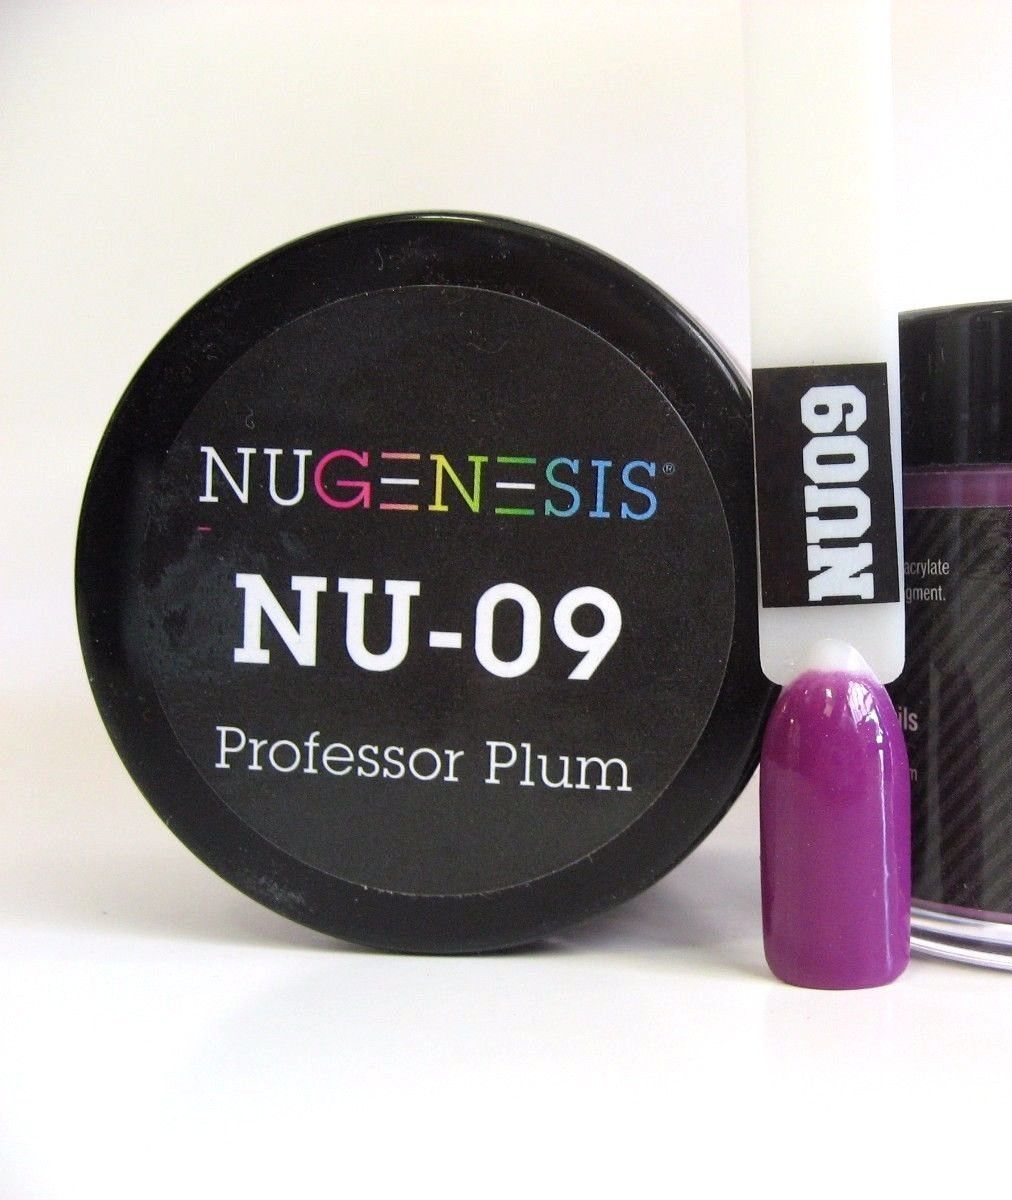 NuGenesis Manicure Nail Dipping Powder 2oz/43g jar - (NU01 - 60) - Choose Your Color